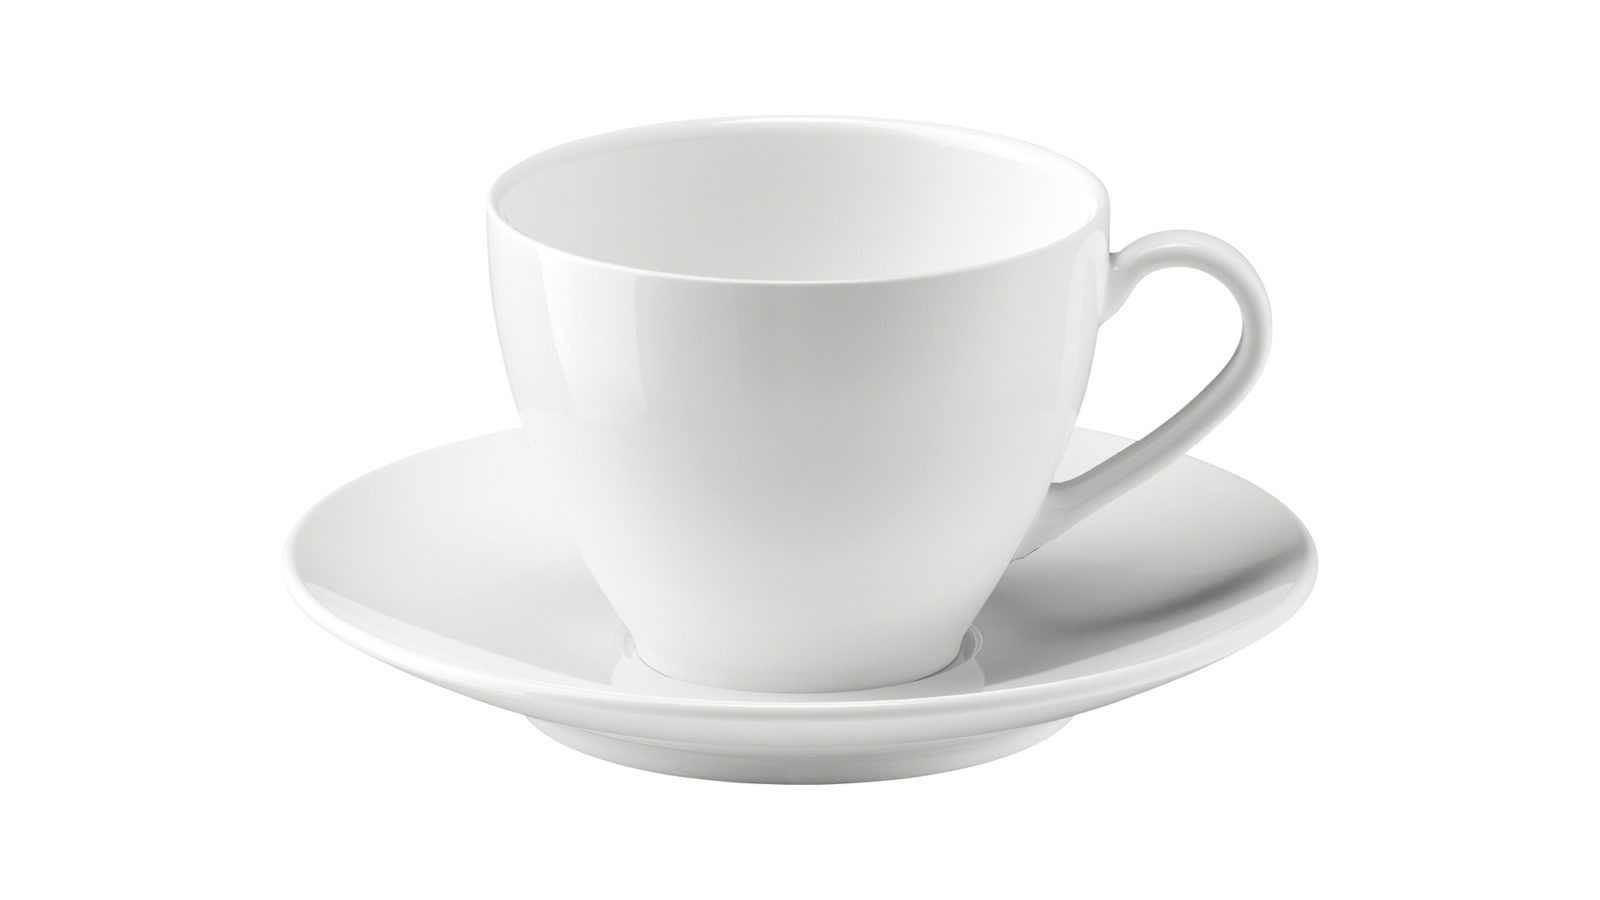 IKEA 365+ coffee cup and saucer.